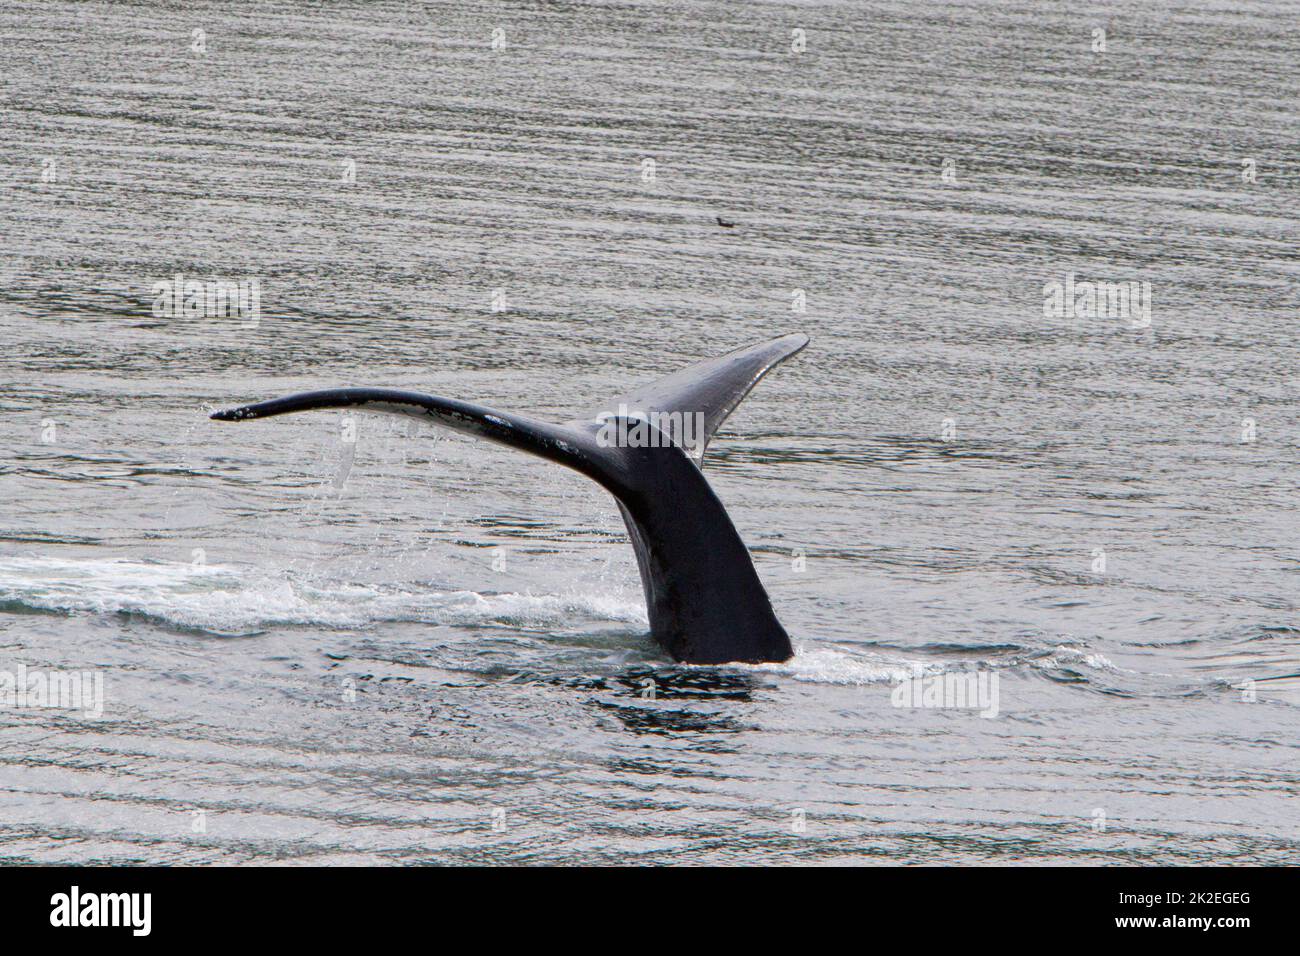 la cola trepadora de una ballena jorobada (Megaptera novaeangliae) buceo en la ensenada de Khutzeymateen al norte del príncipe Rupert, BC, Canadá en julio Foto de stock